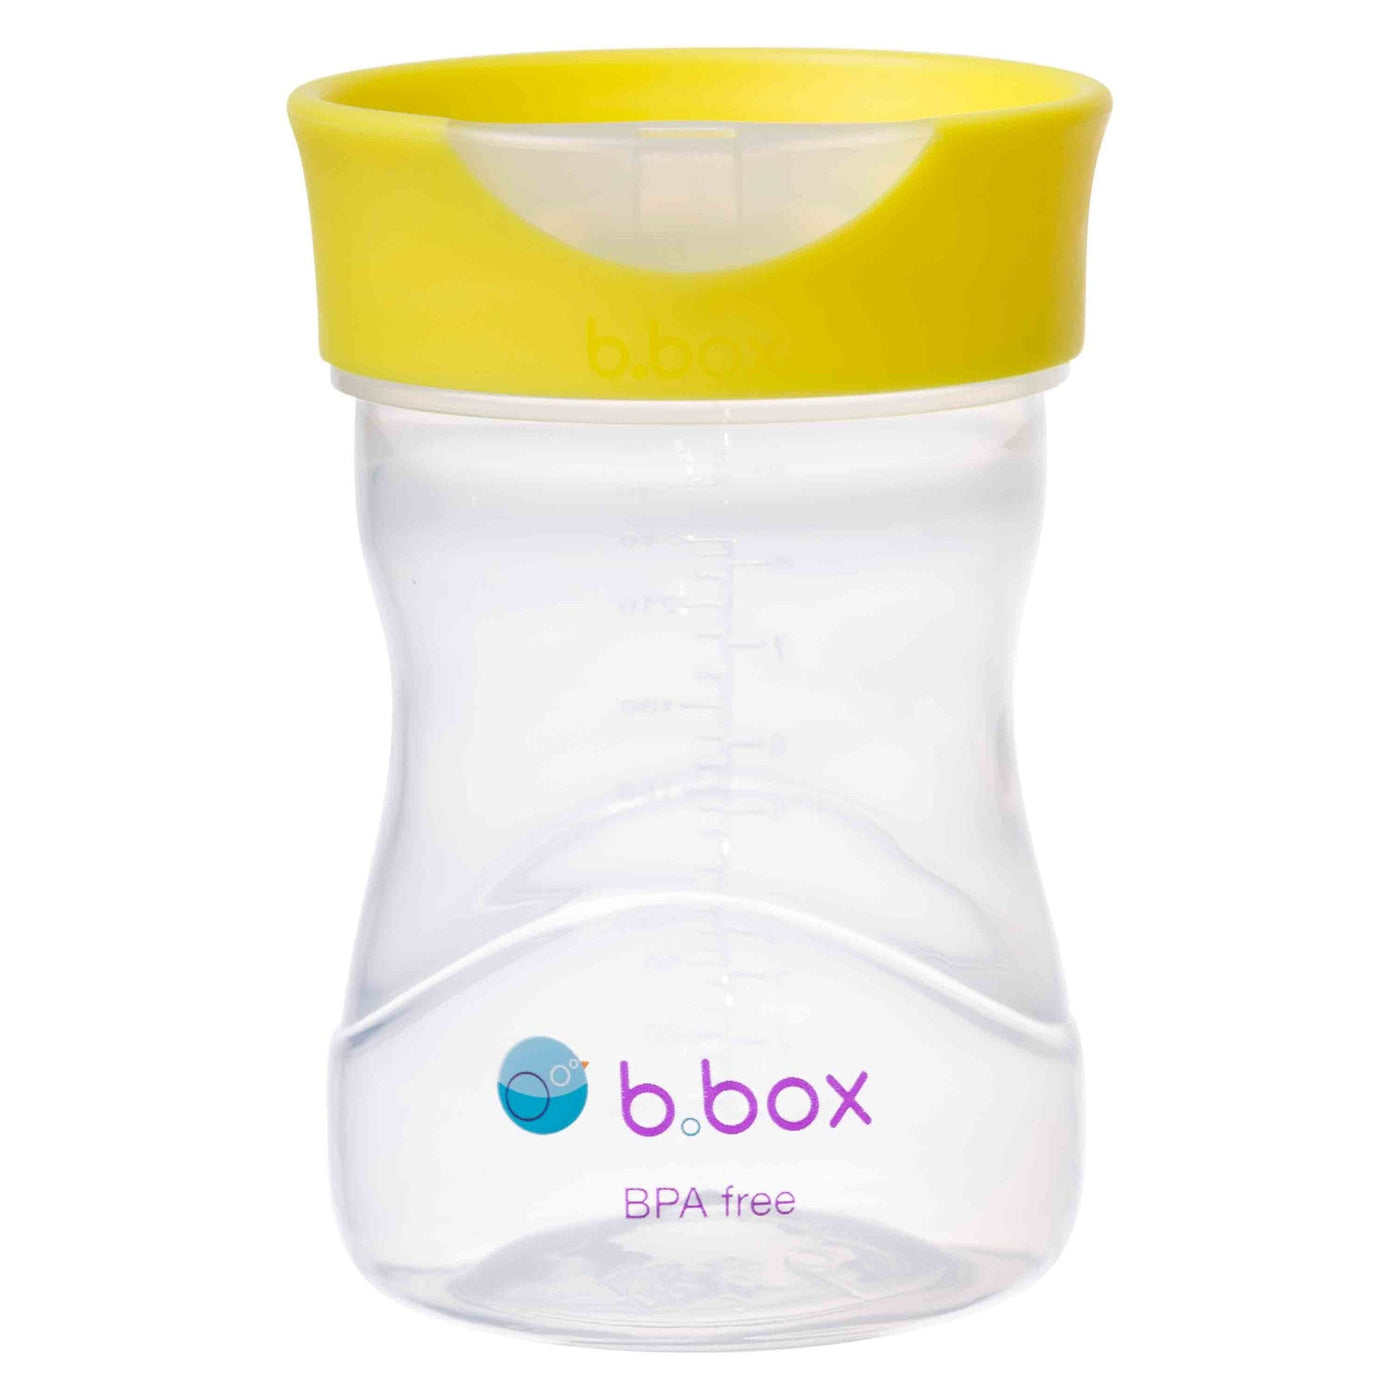 Training Cup: 240ml - Yellow | b.box by B.Box Baby Care